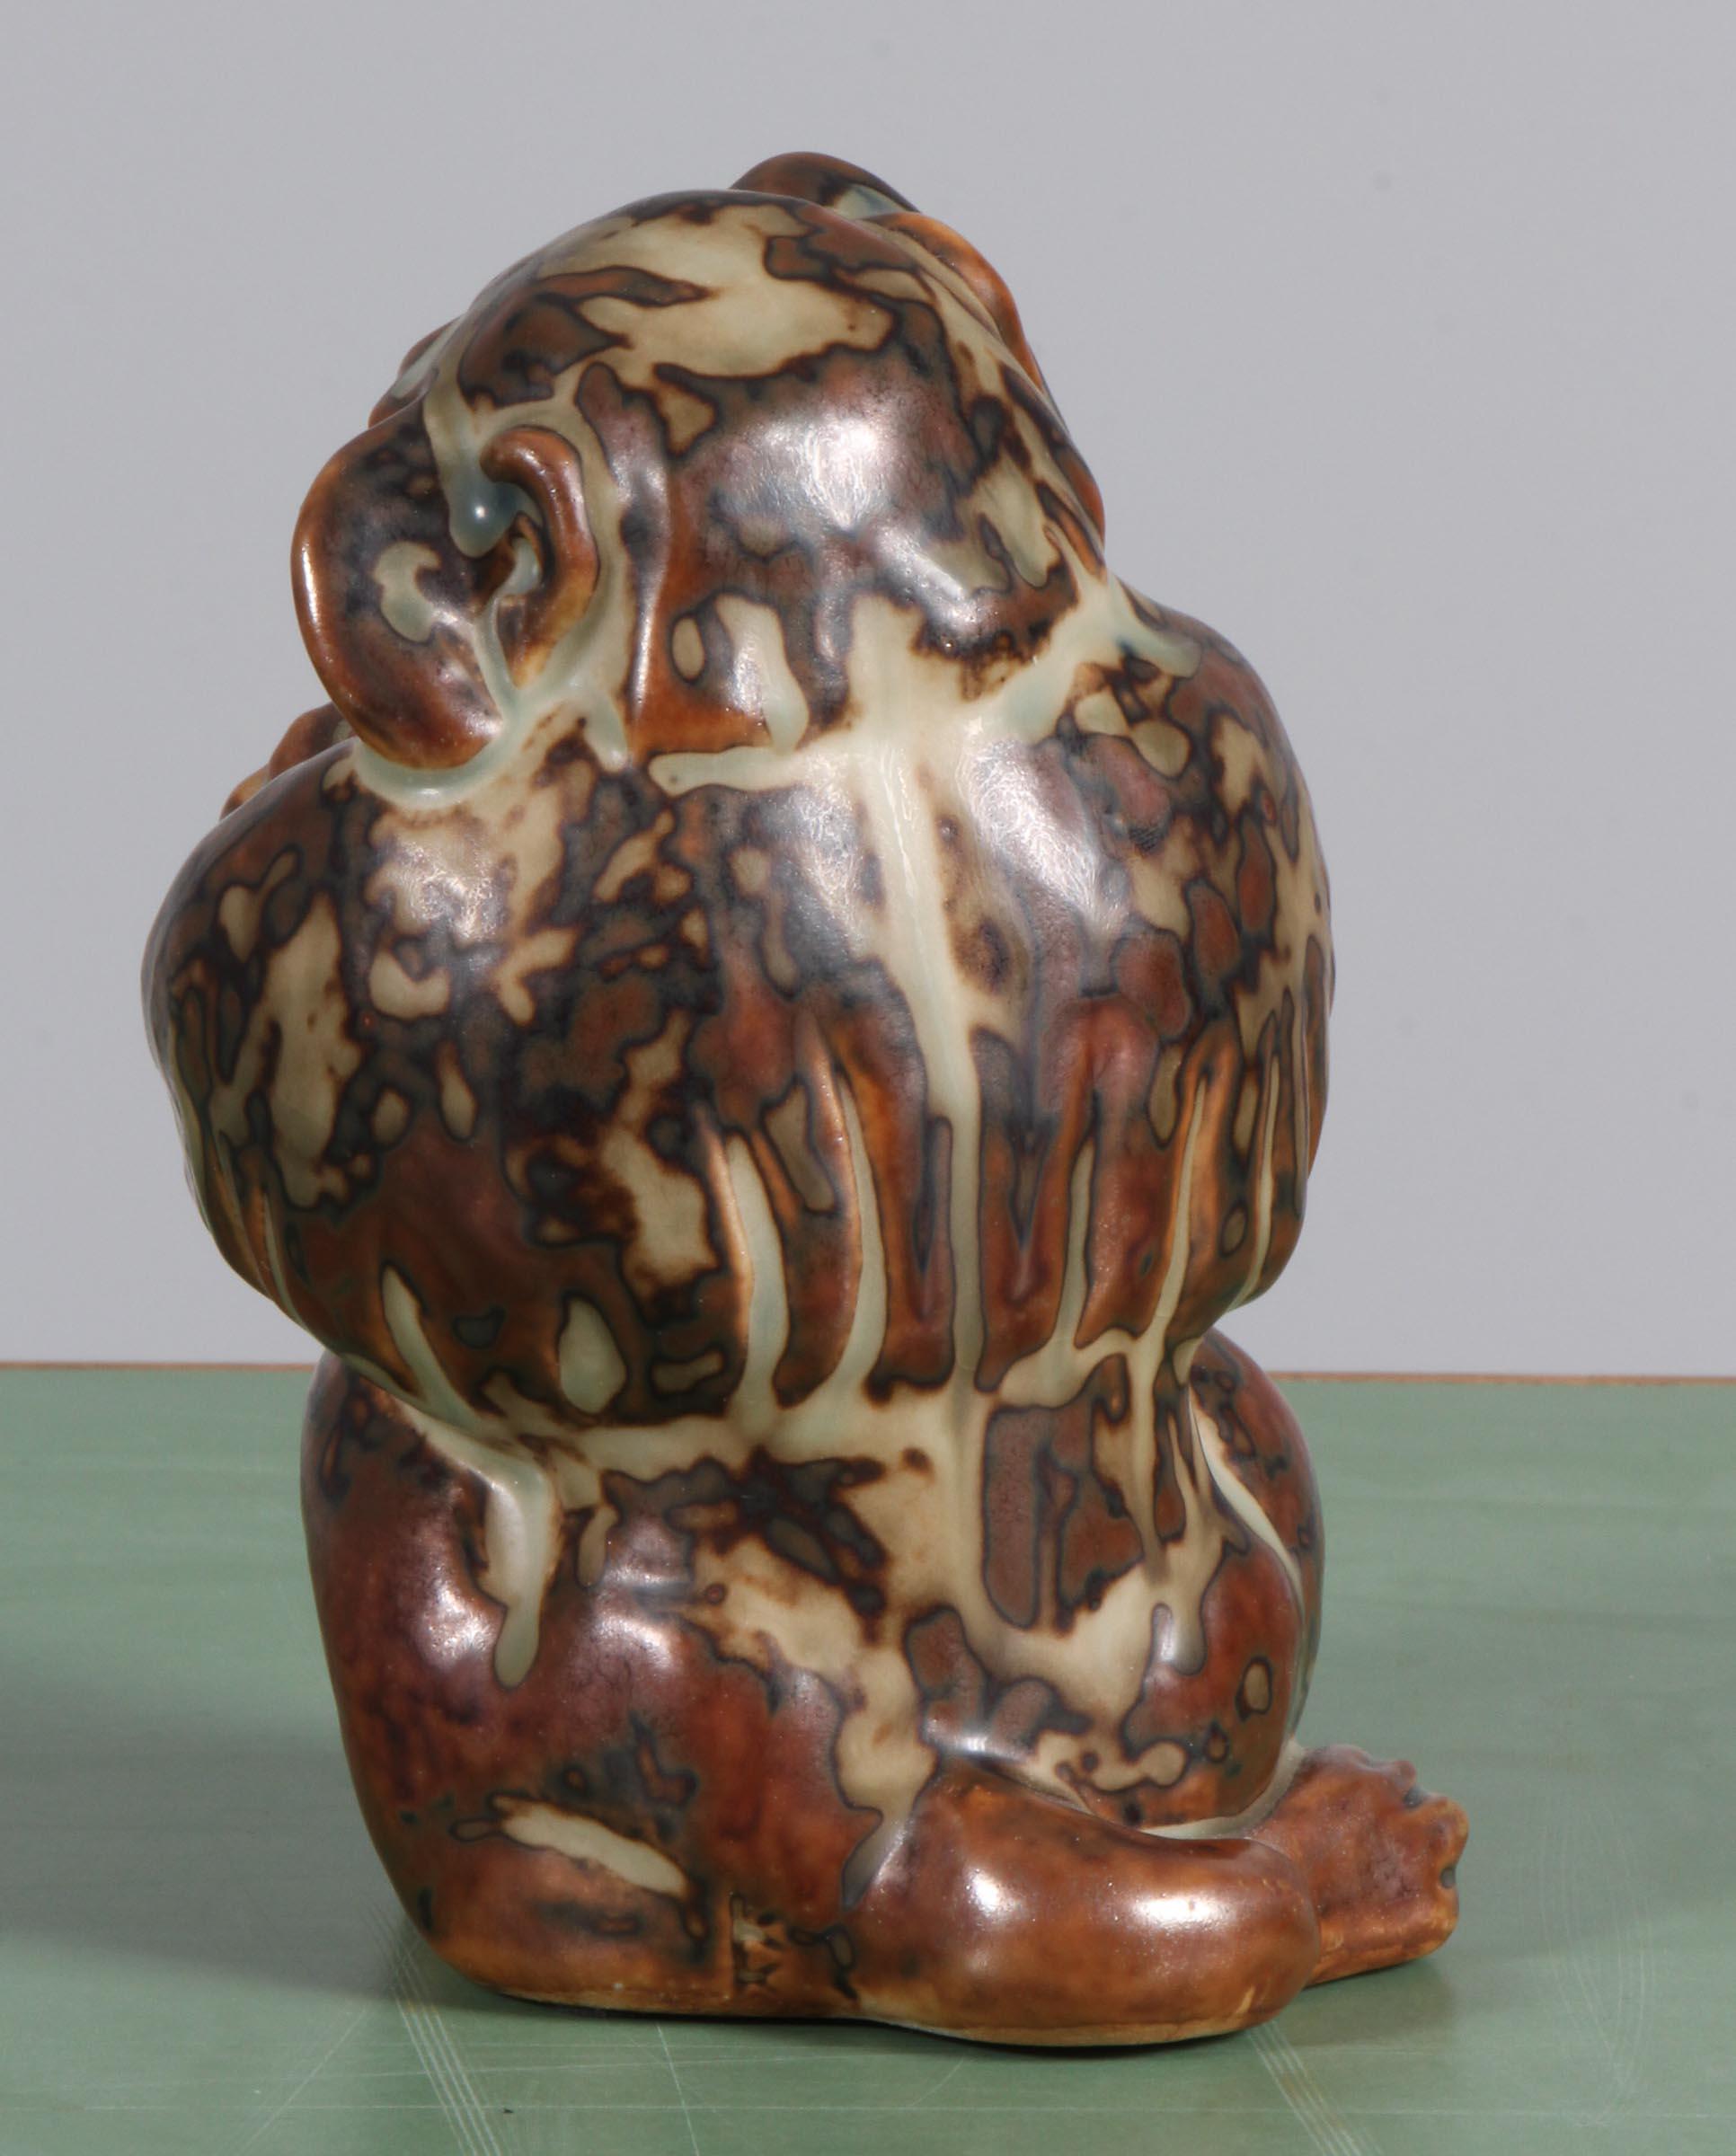 Danish Glazed Stoneware sitting Ape Figurine, Knud Kyhn for Royal Copenhagen #20216